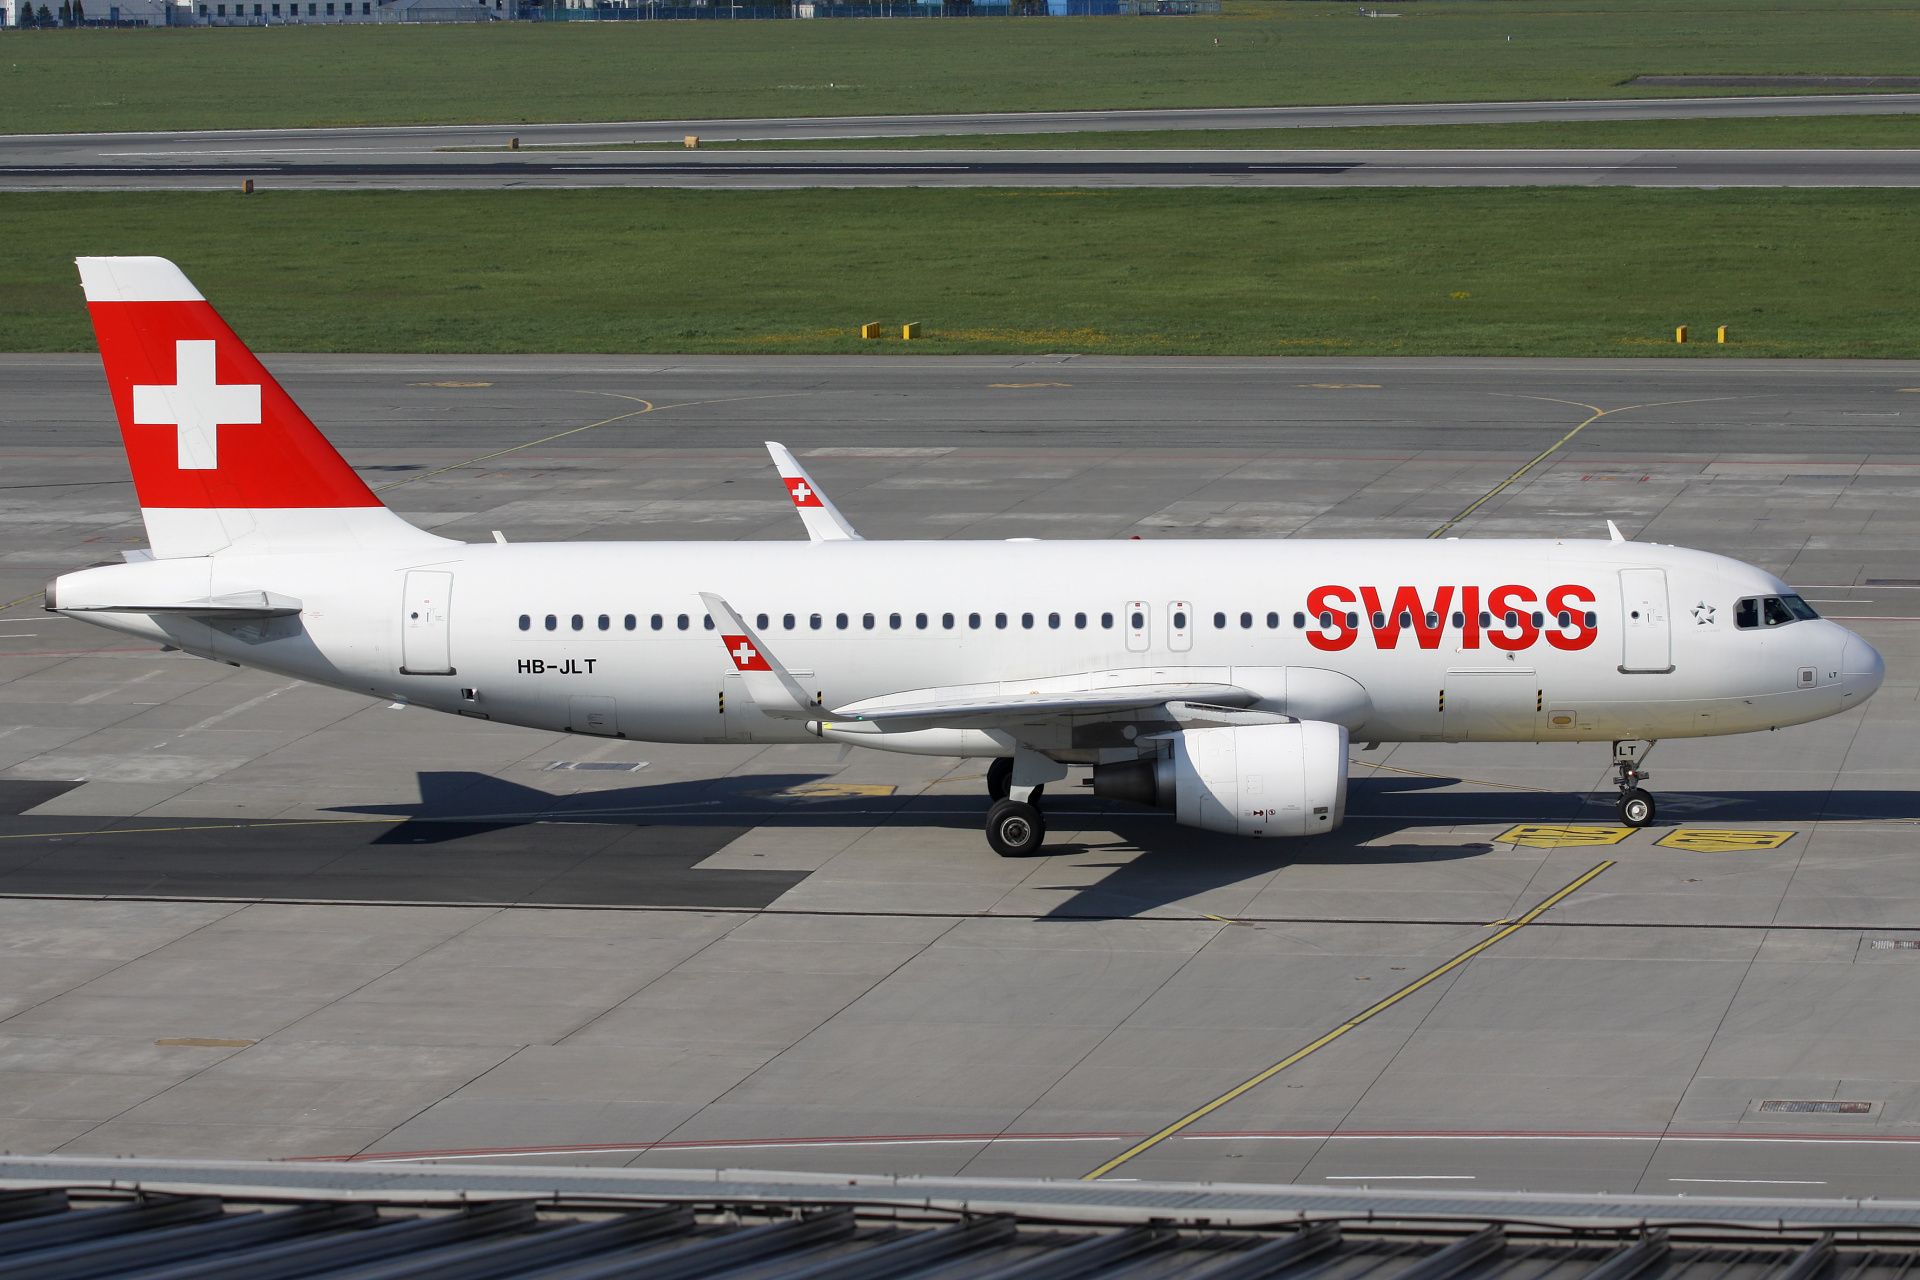 HB-JLT (Aircraft » EPWA Spotting » Airbus A320-200 » Swiss International Air Lines)